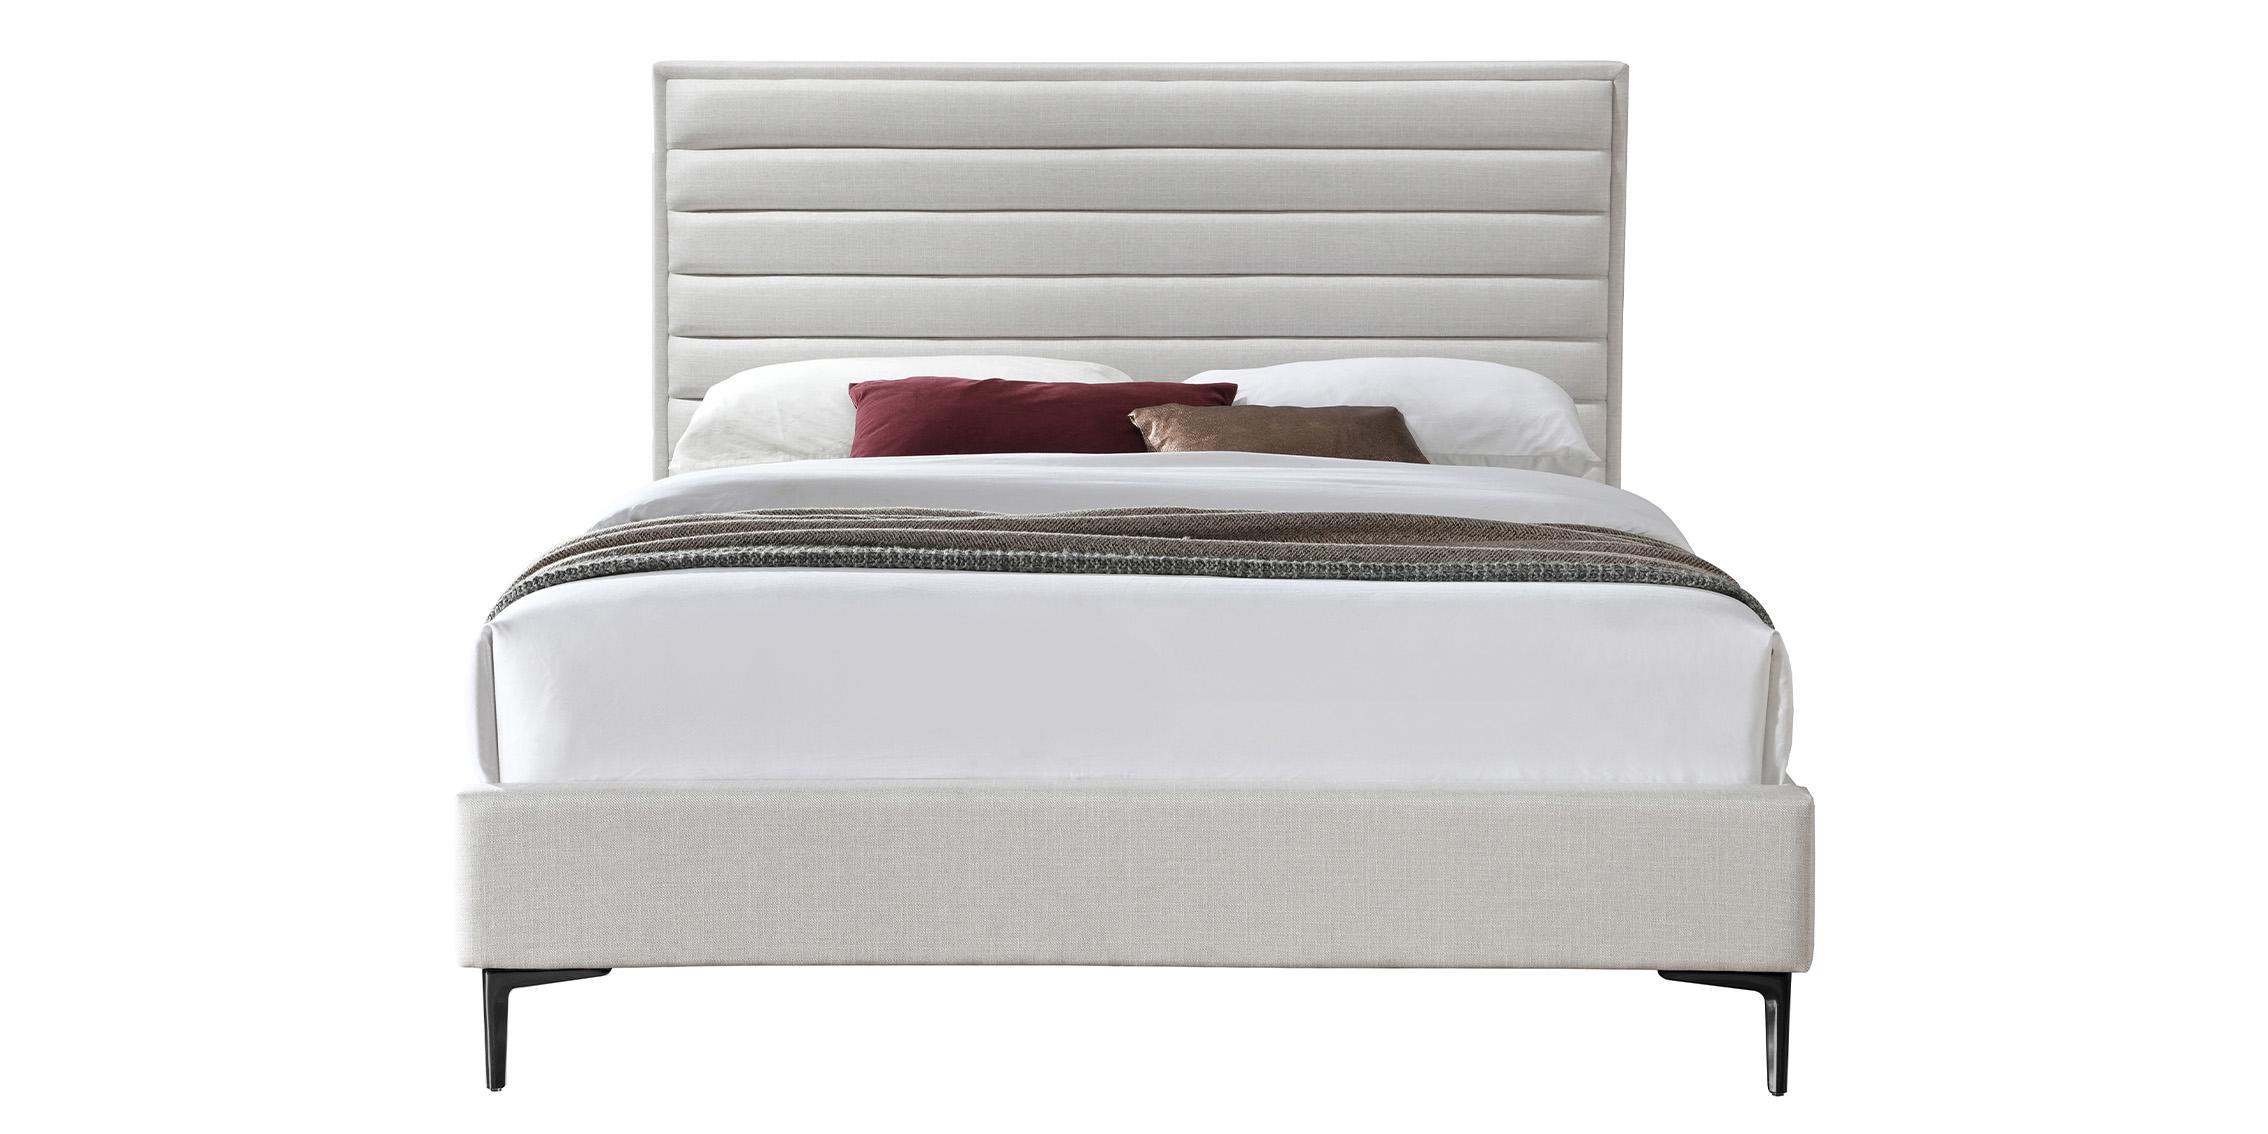 

    
HunterCream-F Meridian Furniture Platform Bed
